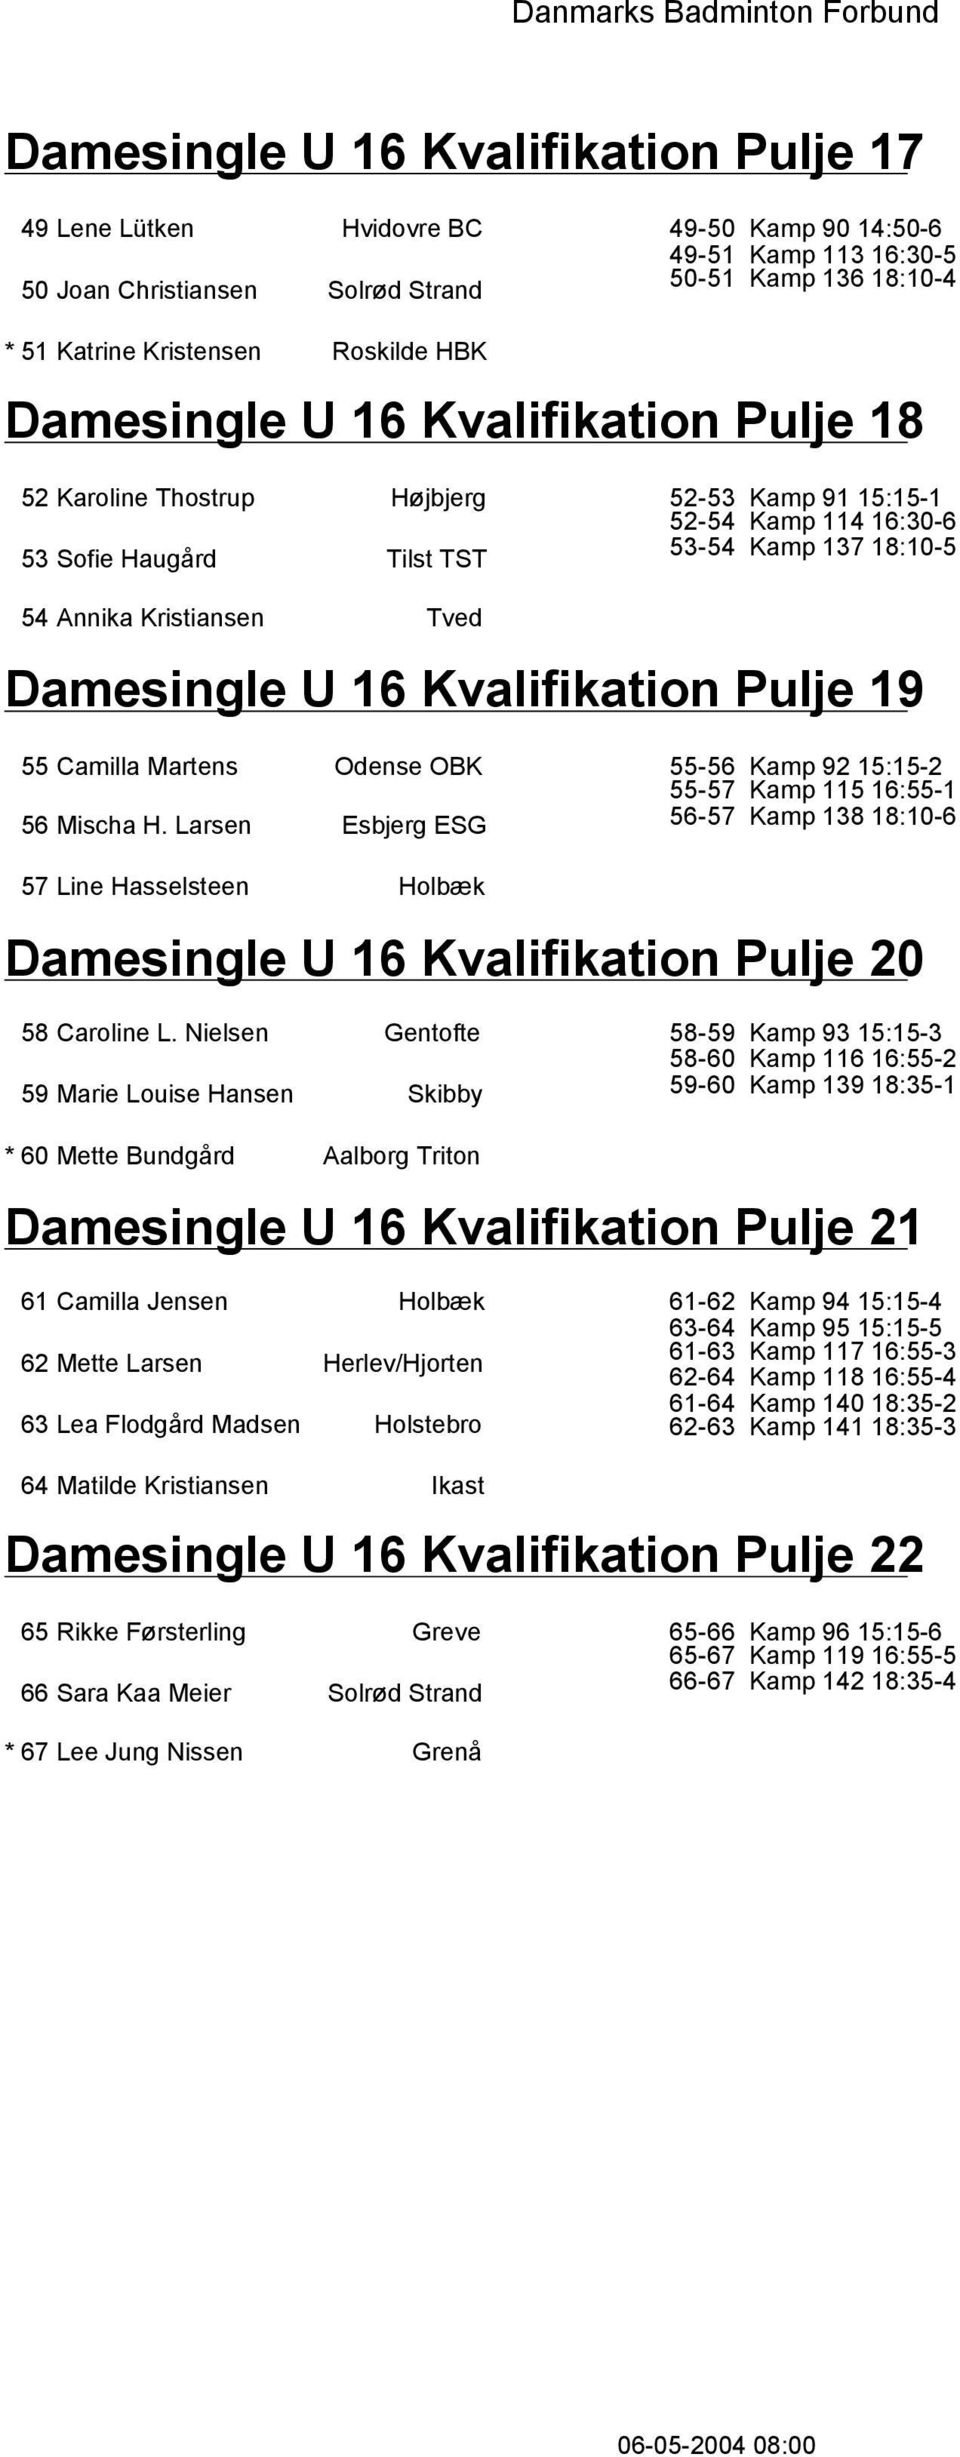 Tved Damesingle U 16 Kvalifikation Pulje 19 55 Camilla Martens Odense OBK 56 Mischa H.